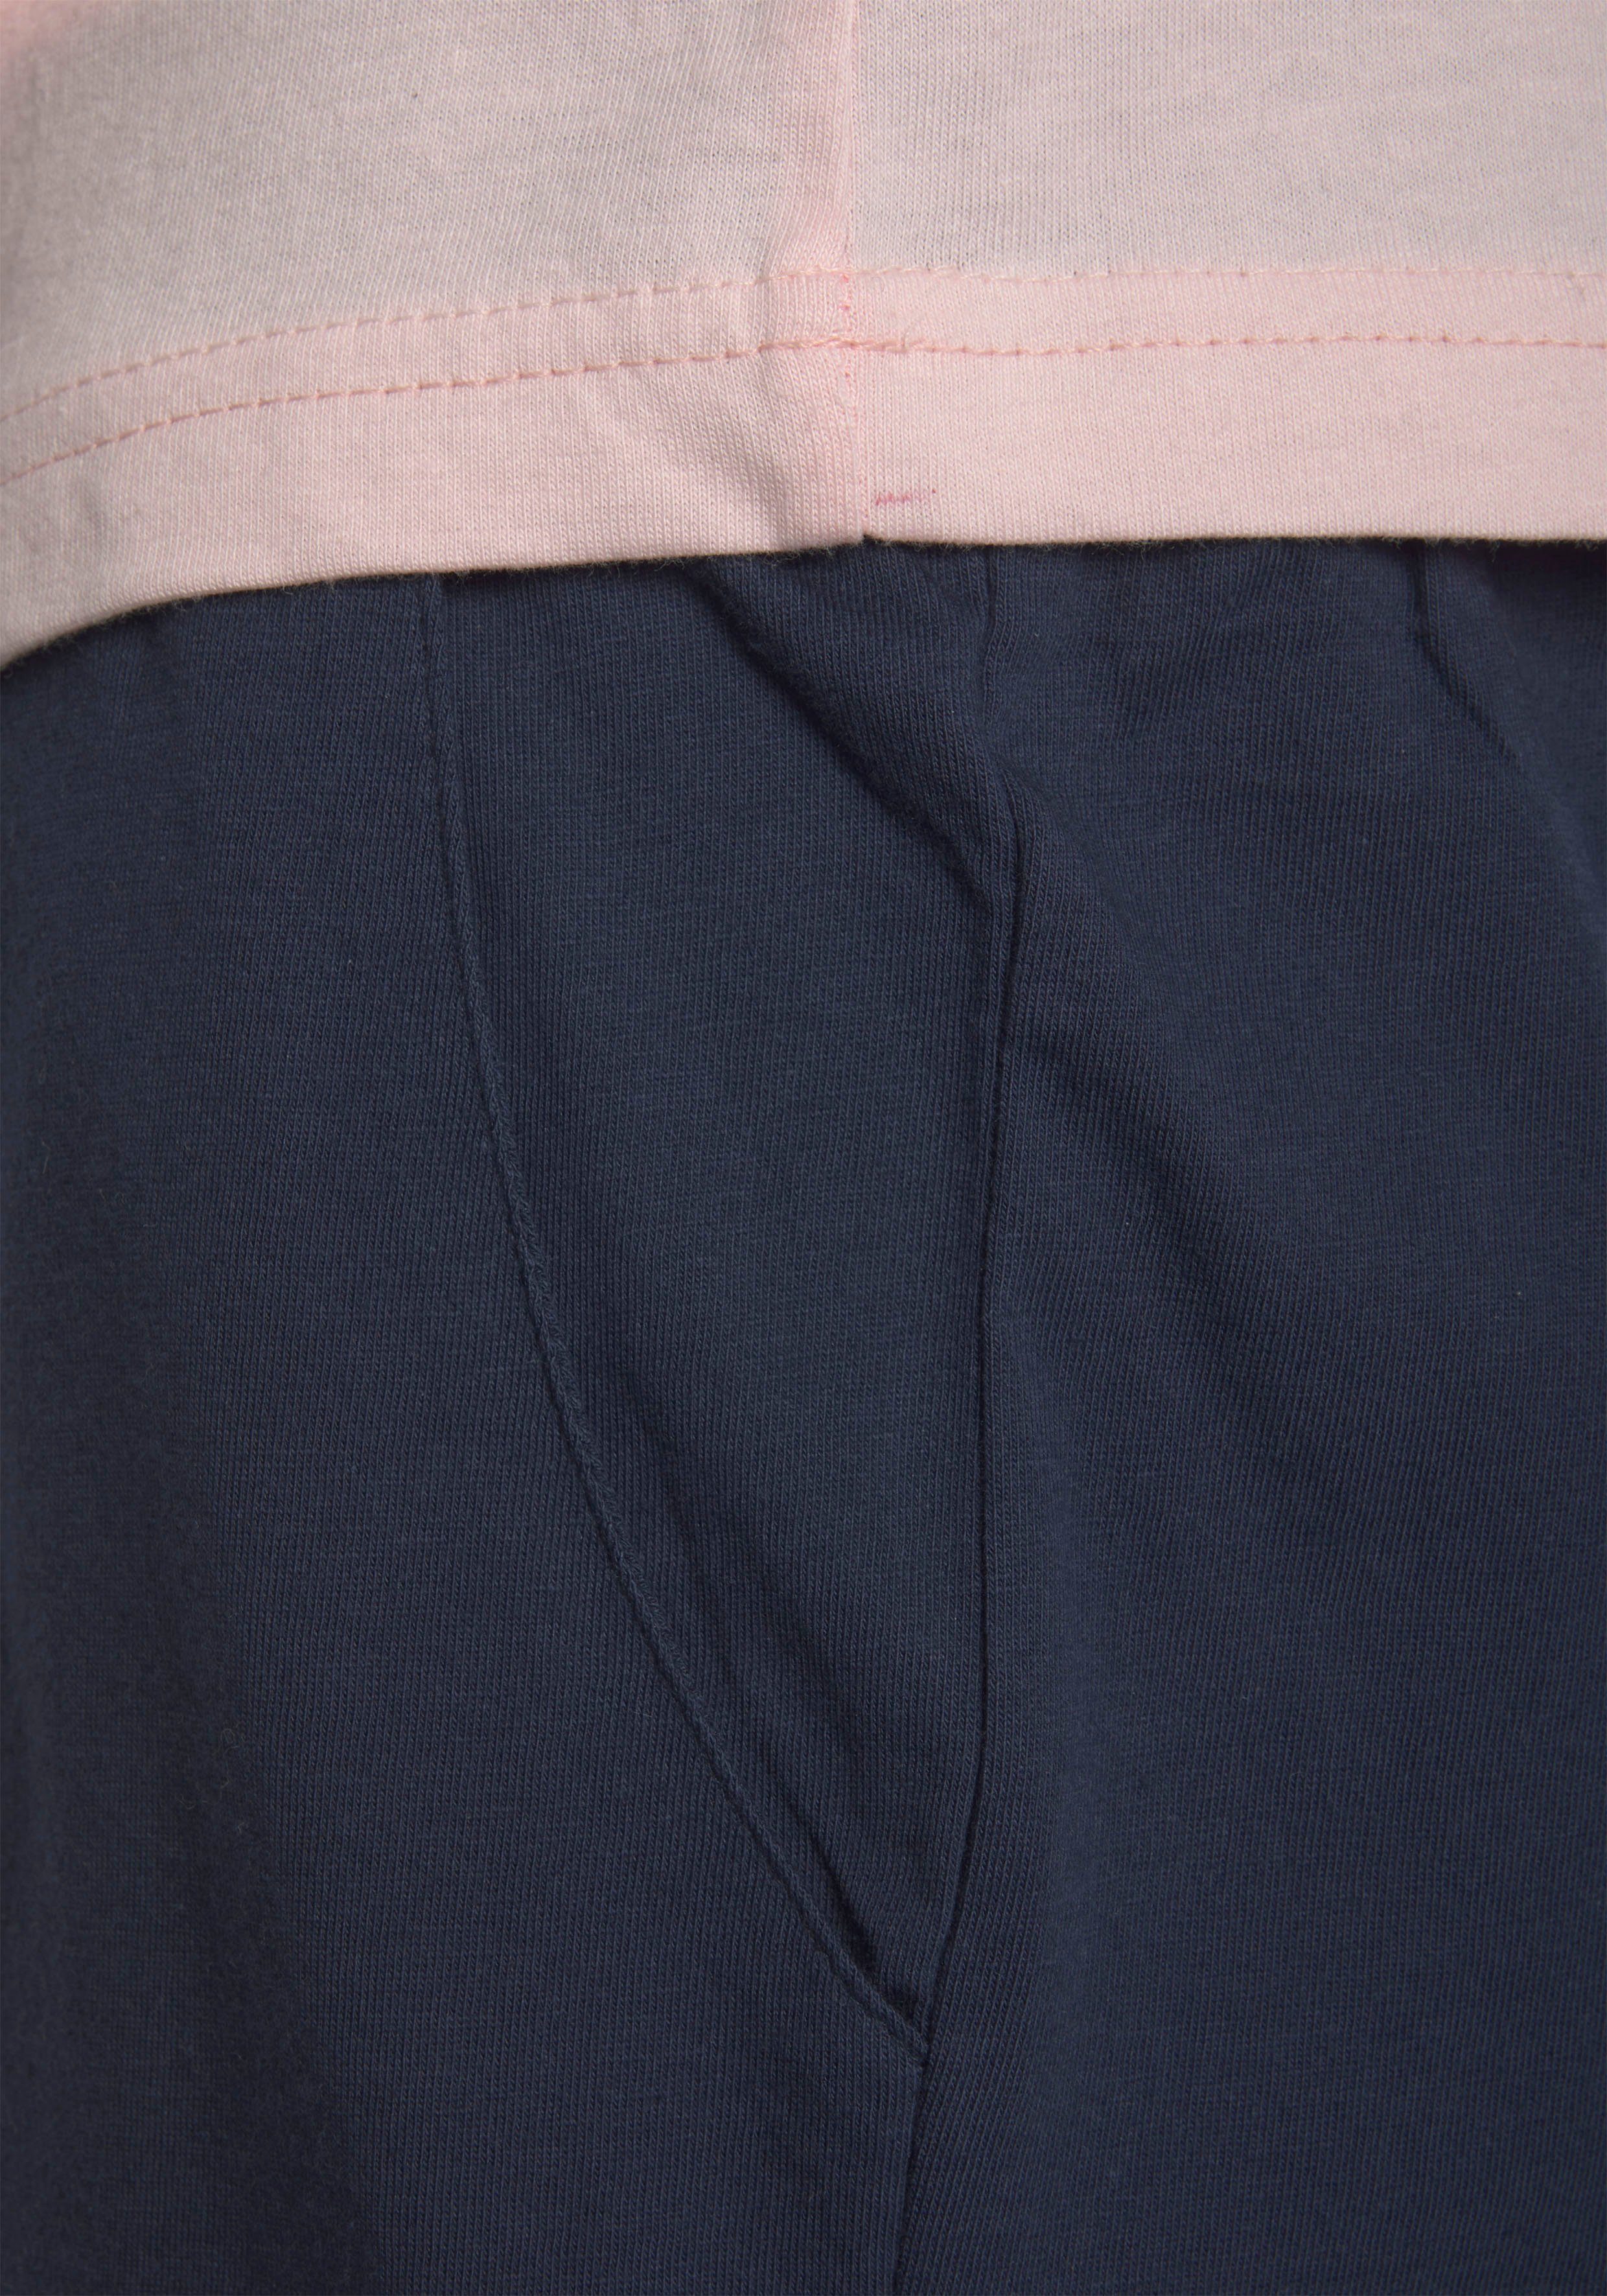 mit KangaROOS rosa-dunkelblau (2 Stück) 1 Shorty tlg., Raglanärmeln kontrastfarbenen